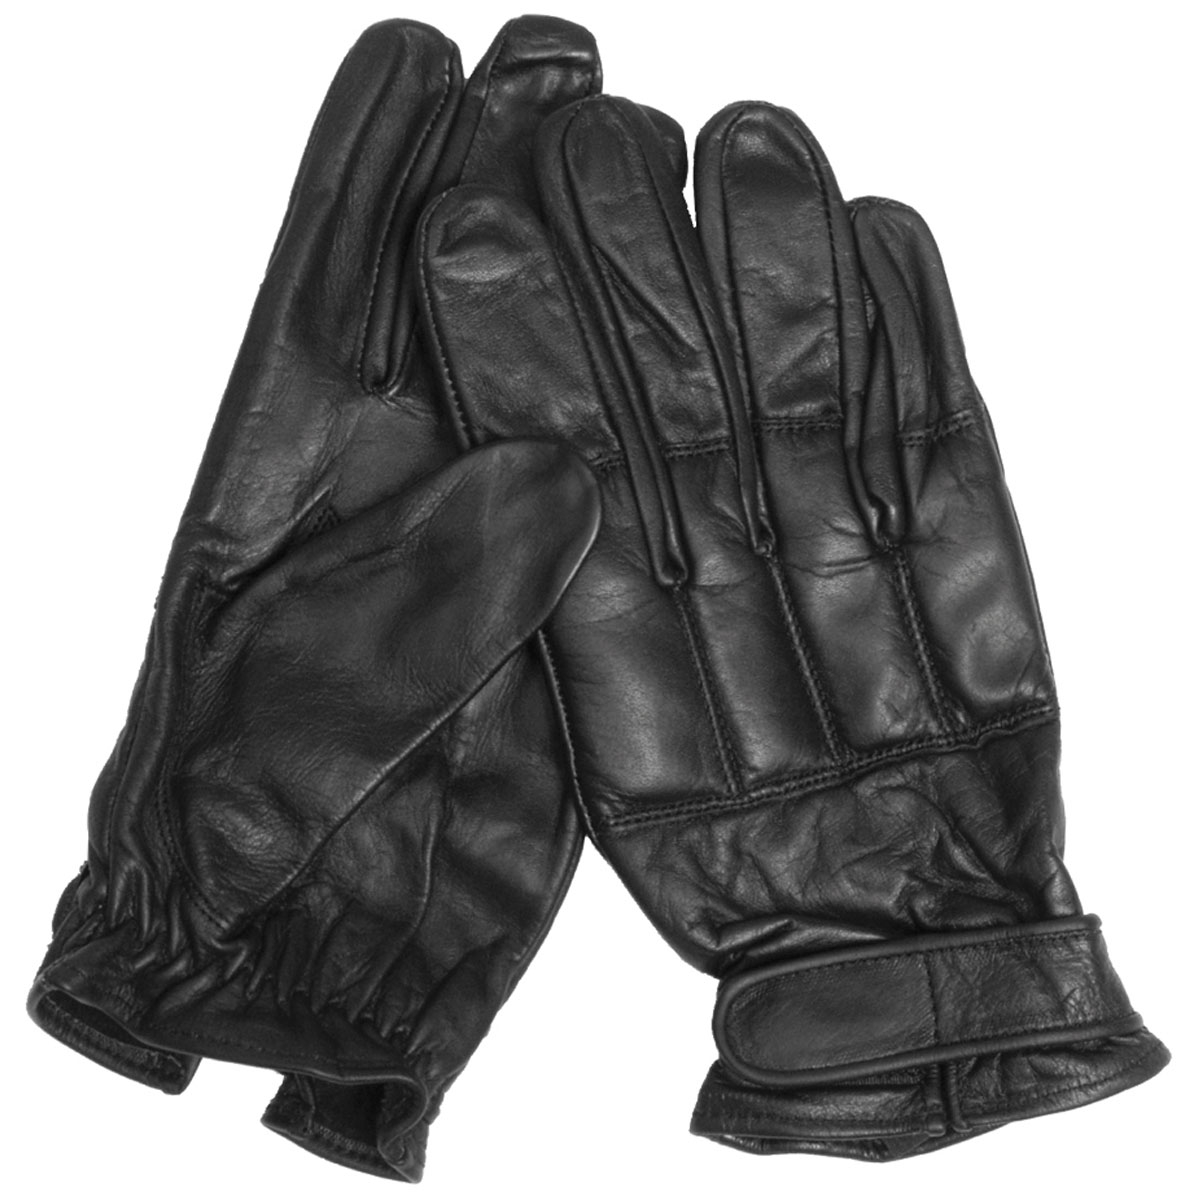 Taktische Security Handschuhe DEFENDER Quarzsand S XXL schwarz SWAT